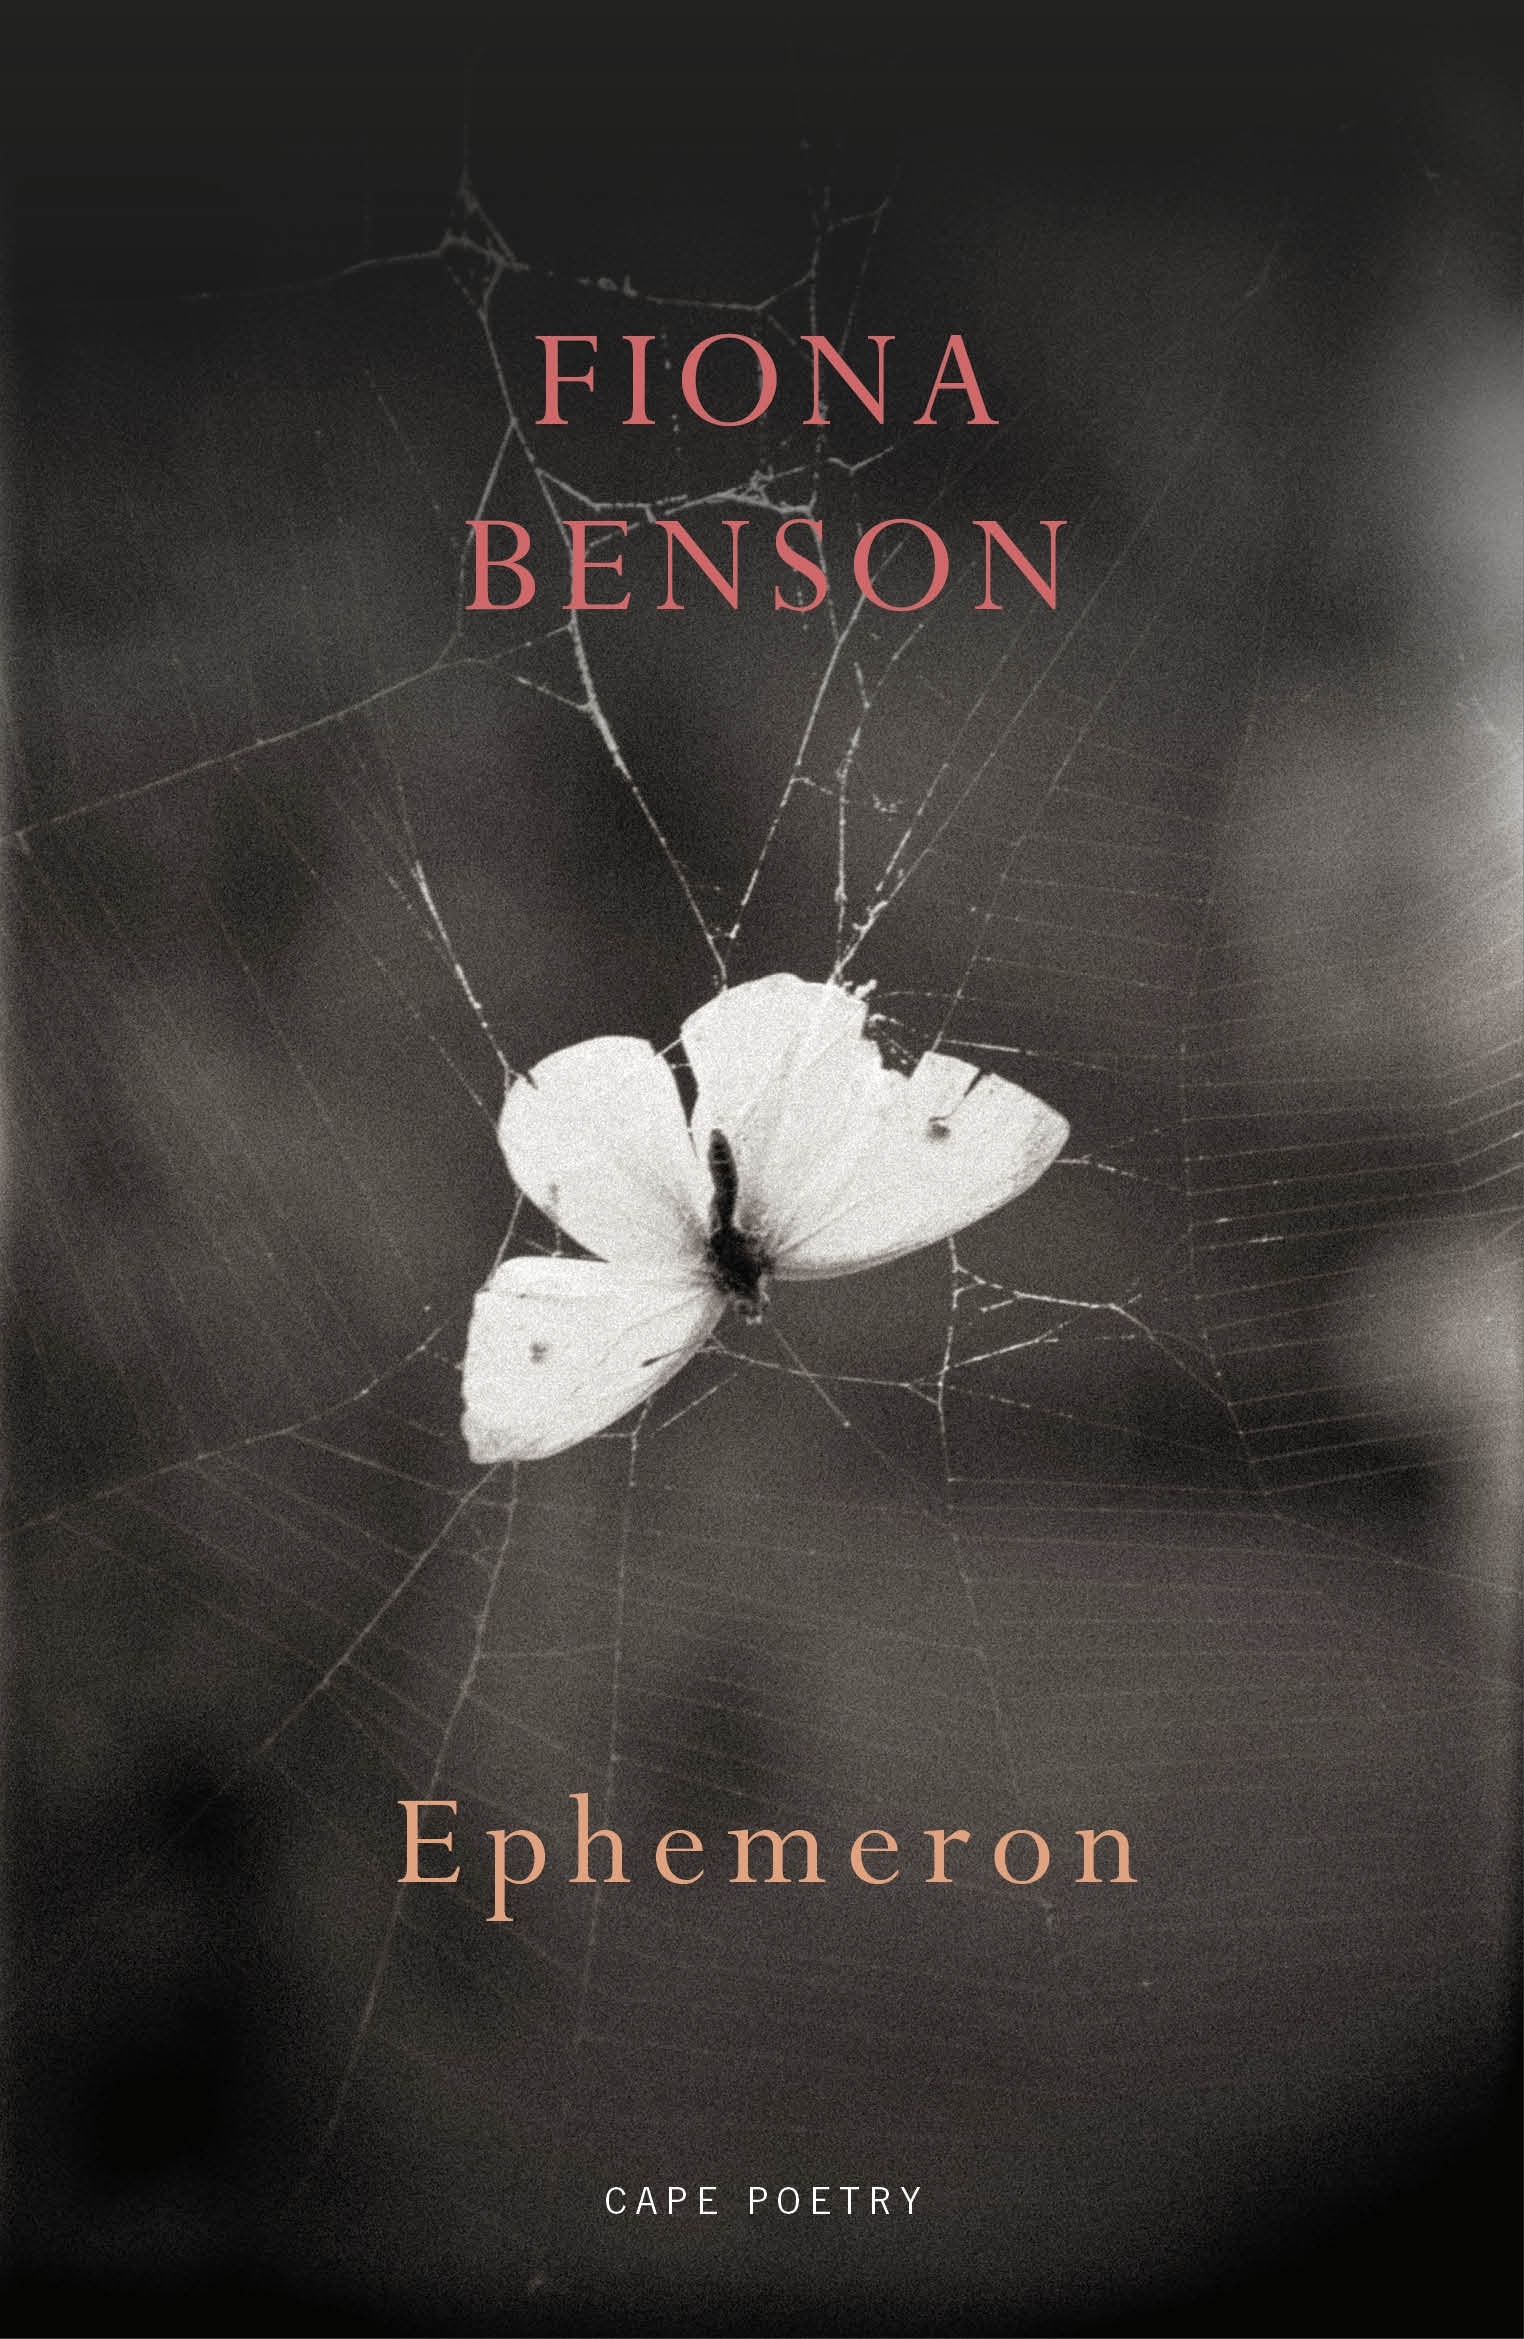 Book “Ephemeron” by Fiona Benson — February 10, 2022